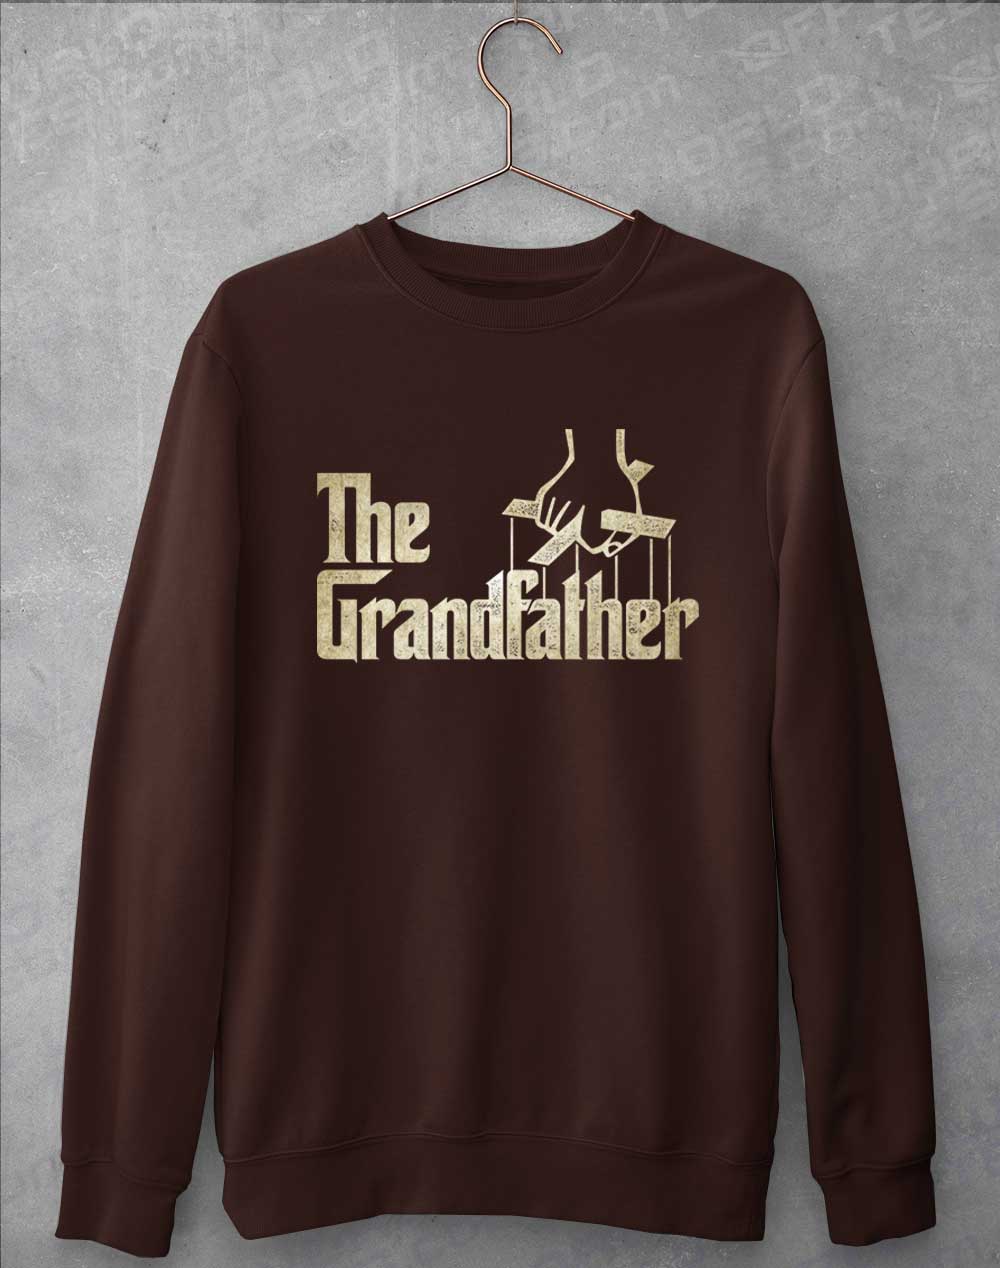 Hot Chocolate - The Grandfather Sweatshirt